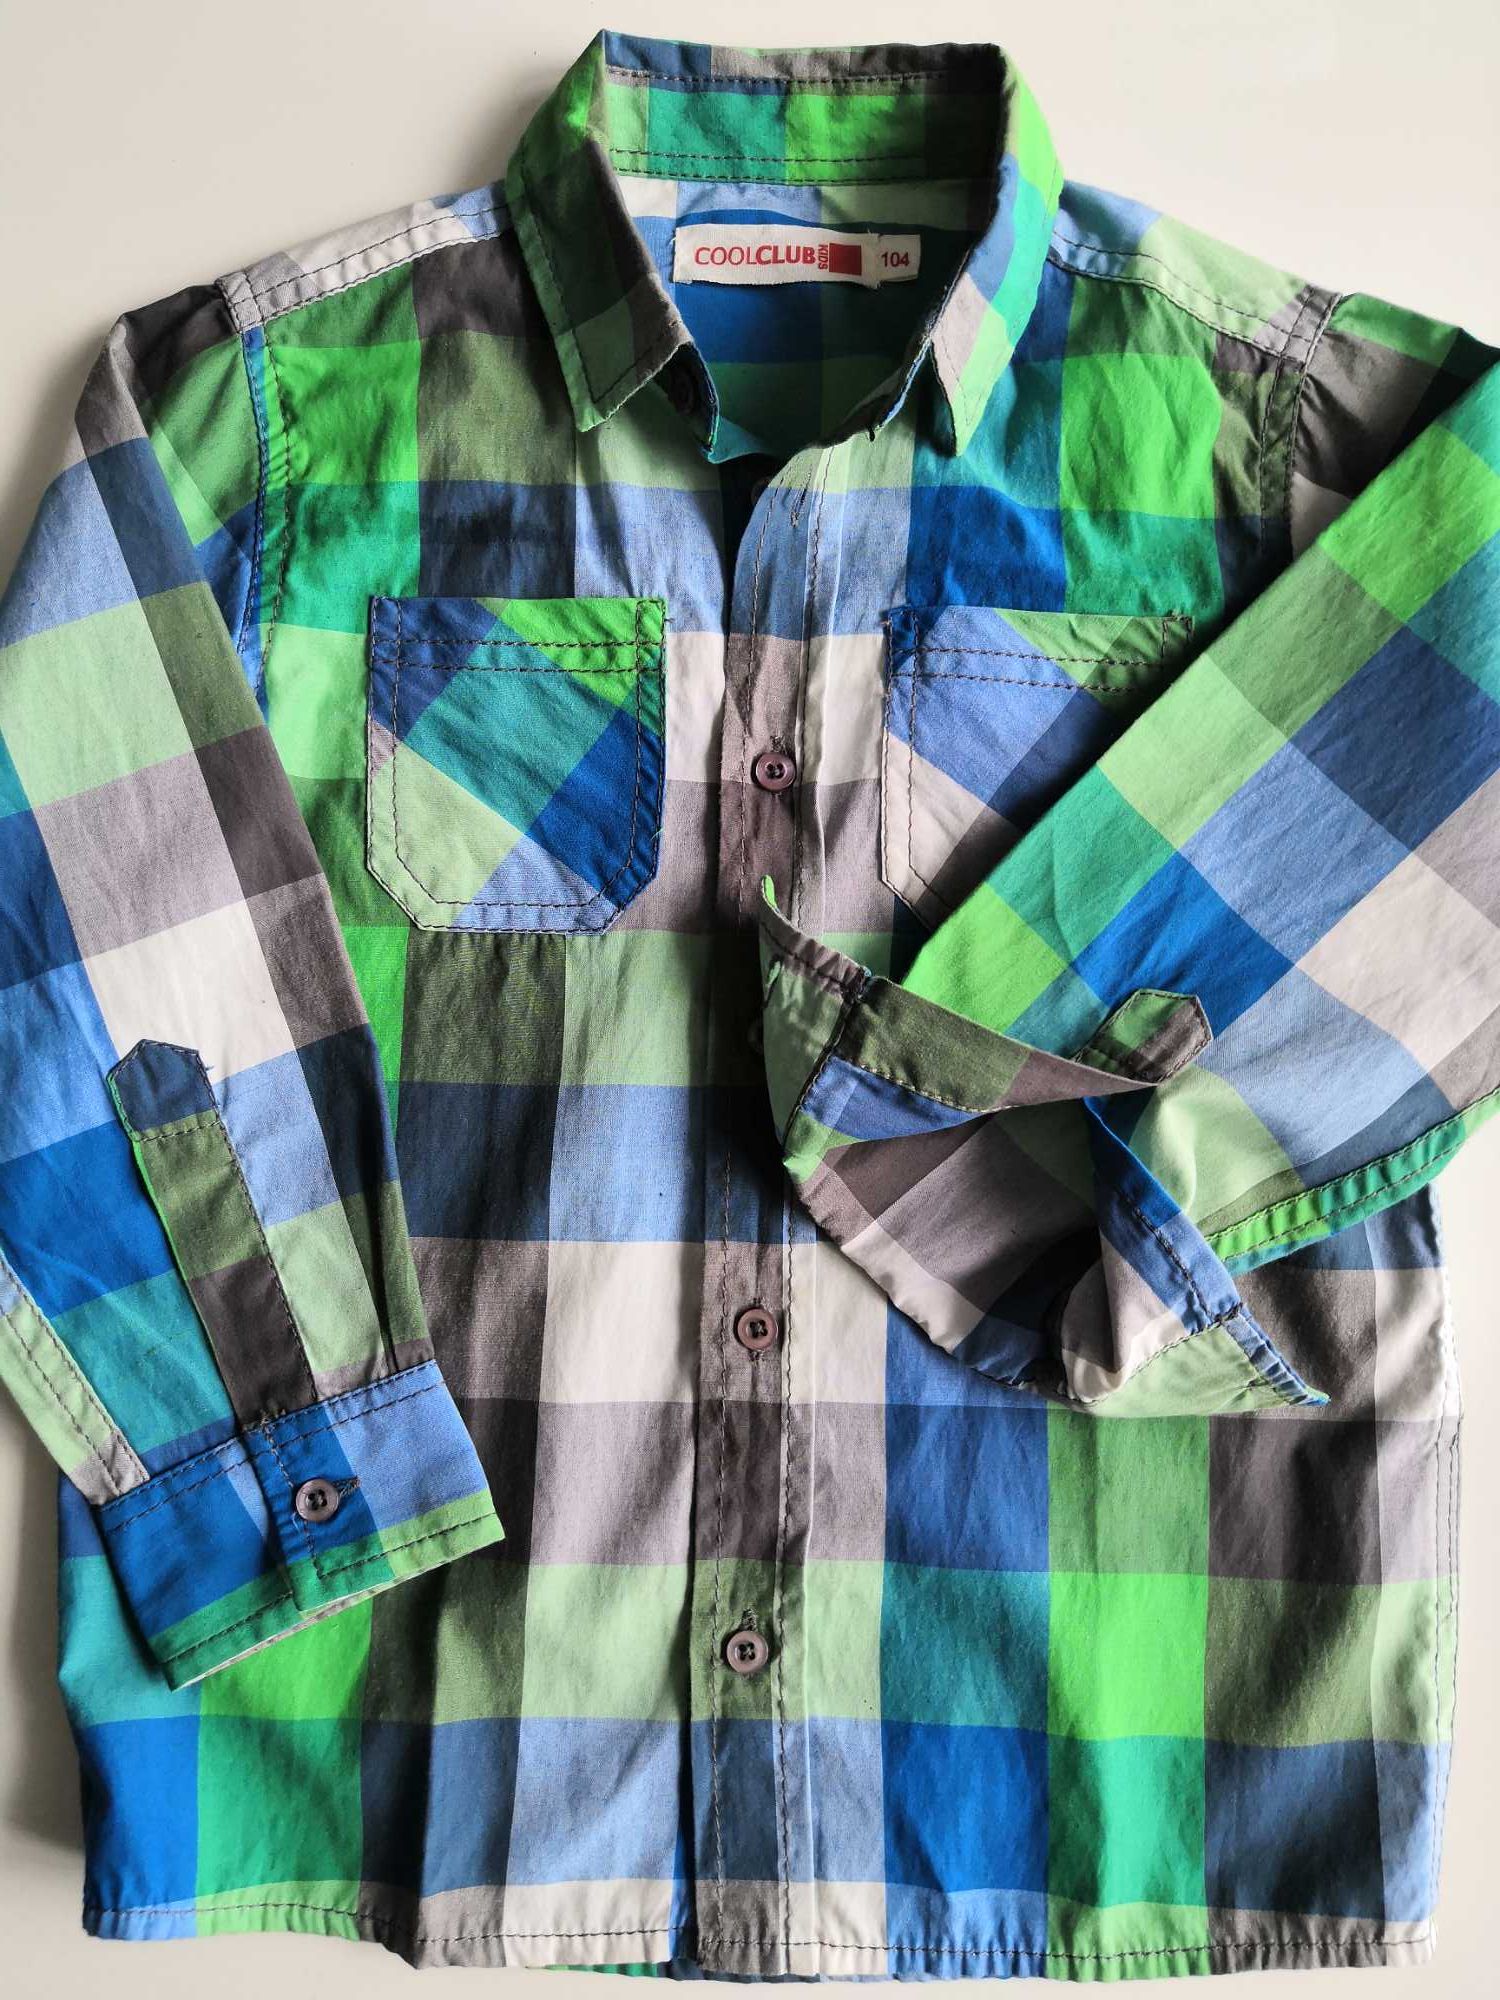 Koszula w kratę chłopięca r.104 cool club zielono niebieska stan bdb+